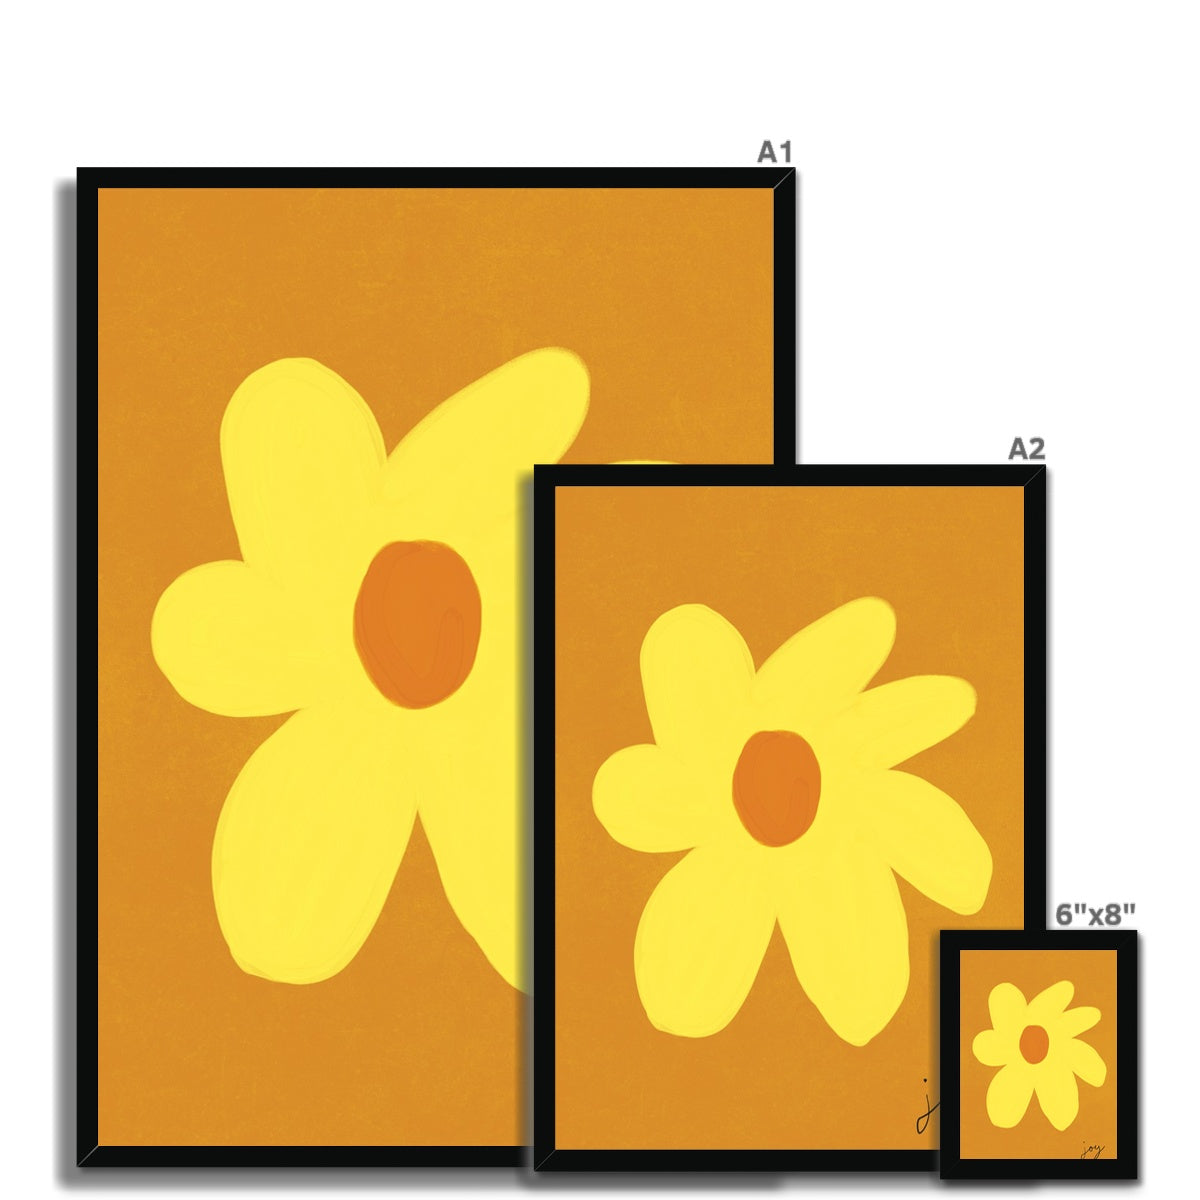 Joy Flower Print - Brown, Yellow Framed Print